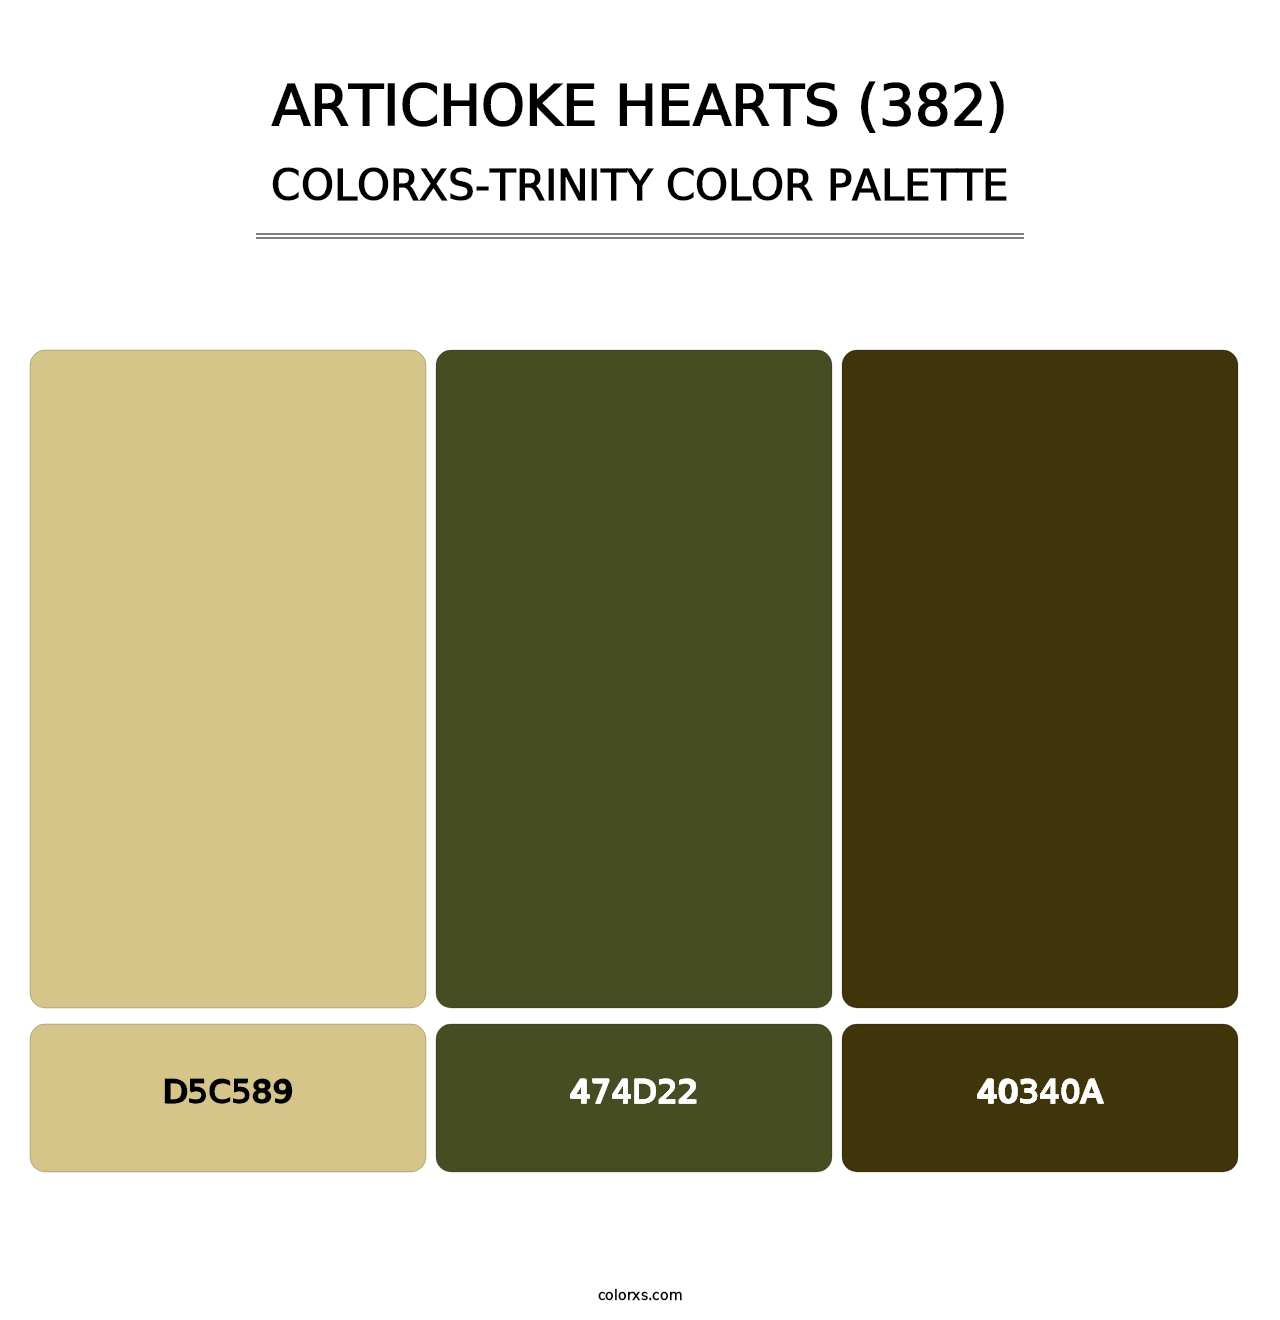 Artichoke Hearts (382) - Colorxs Trinity Palette